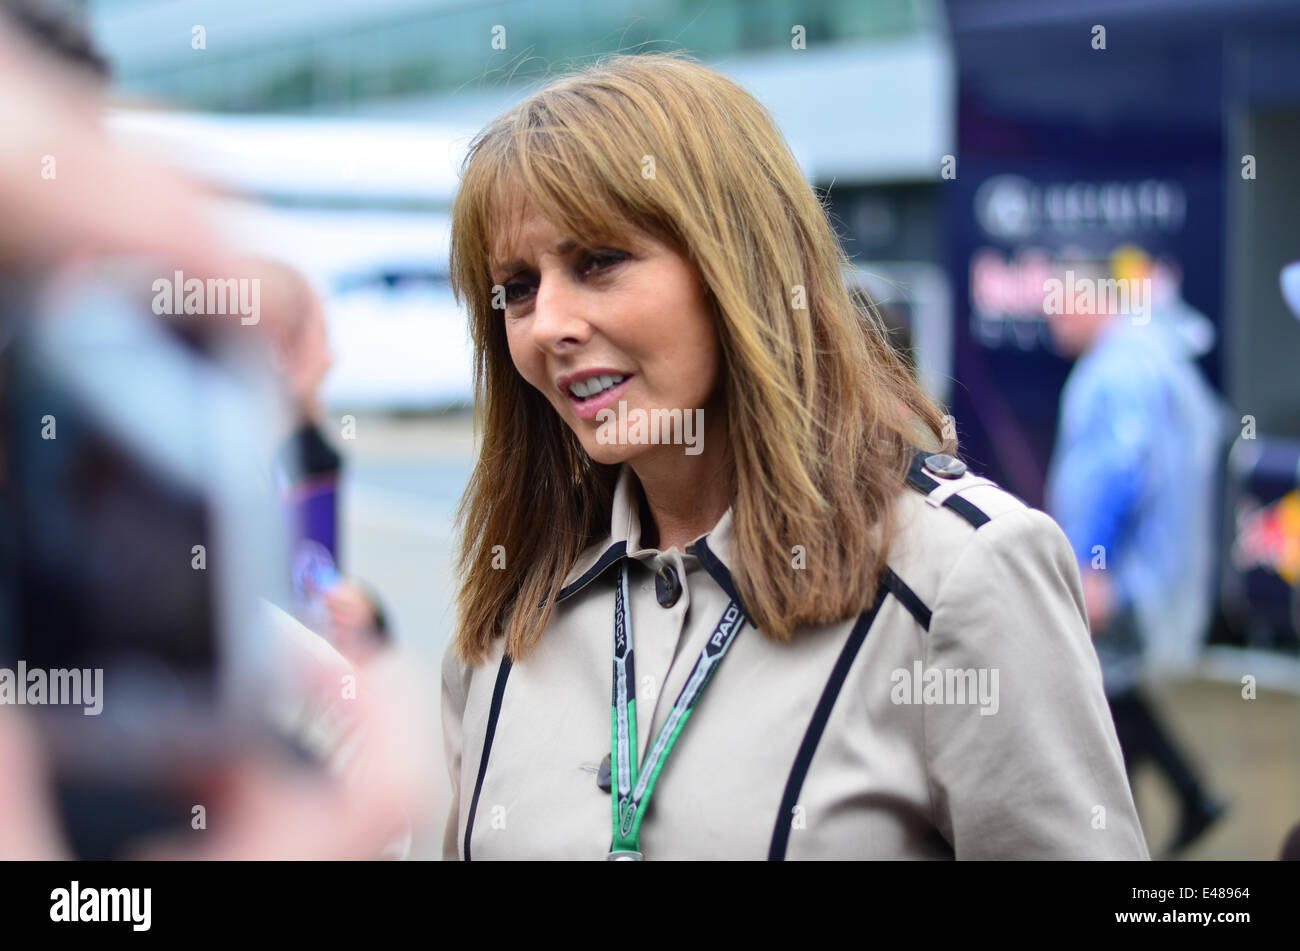 Carol Vorderman, TV presenter, in the Formula 1 paddock